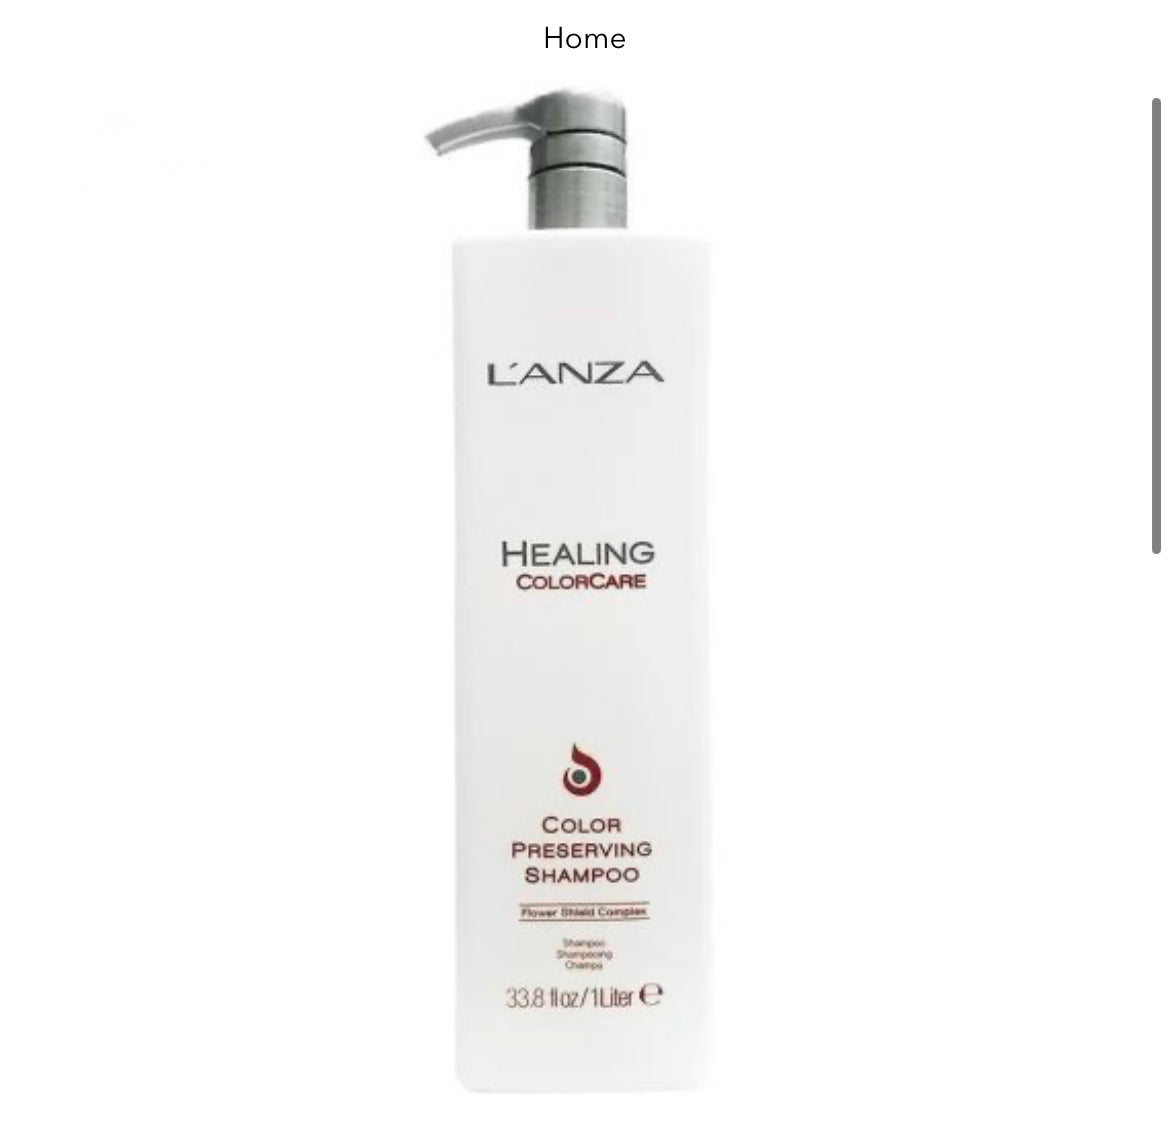 LANZA Healing colorcare Color preserving shampoo 33.8floz